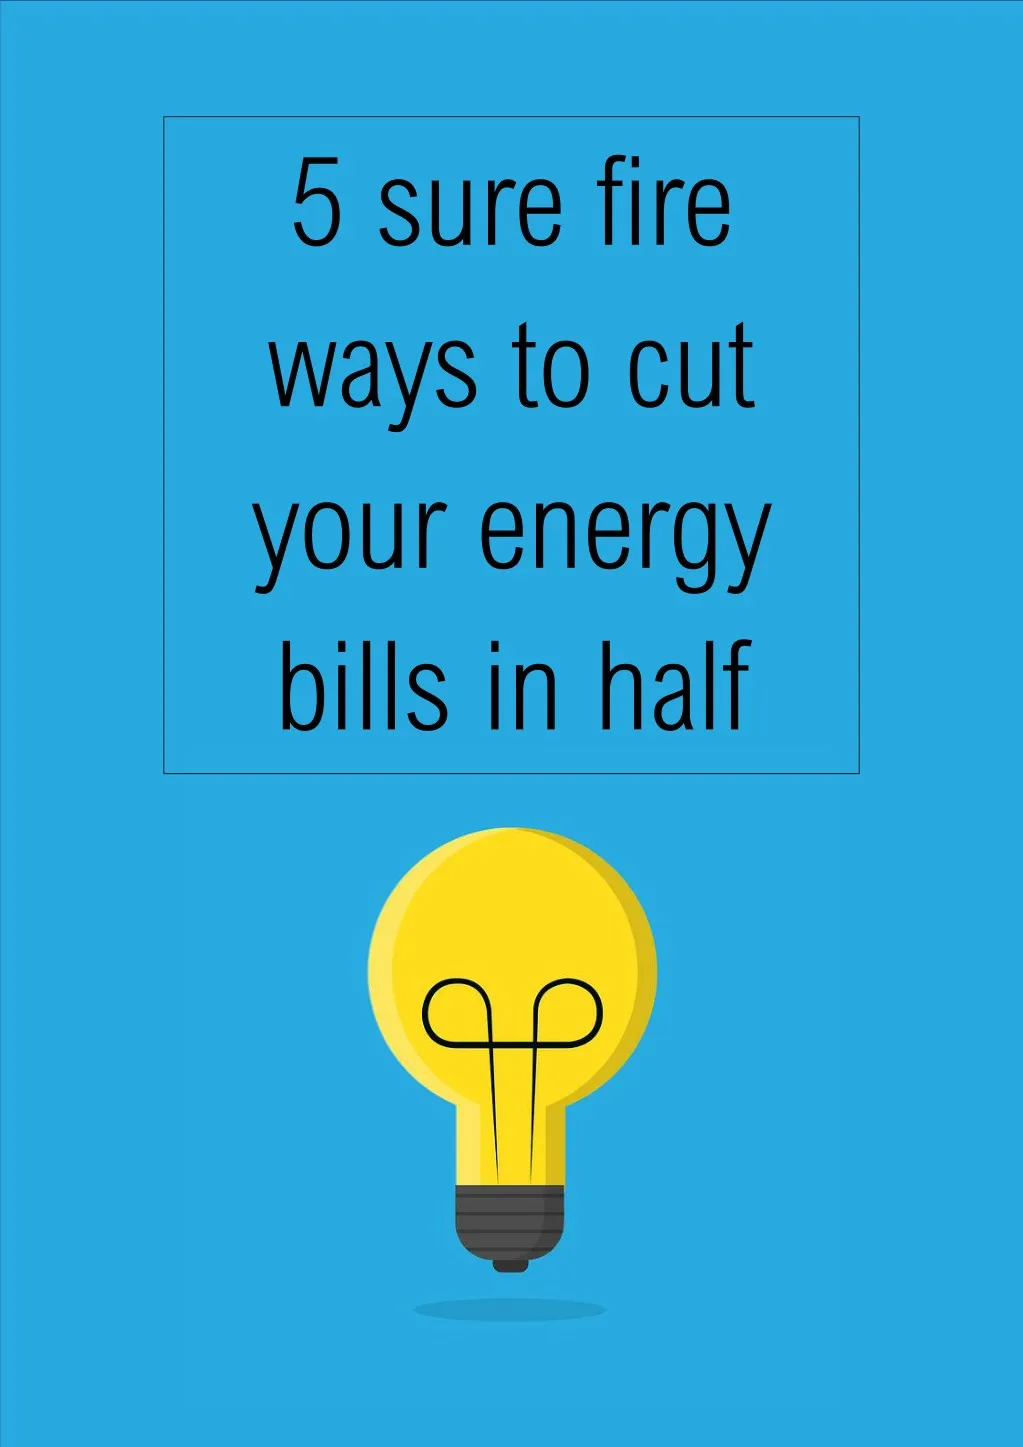 5 sure fire ways to cut your energy bills in half